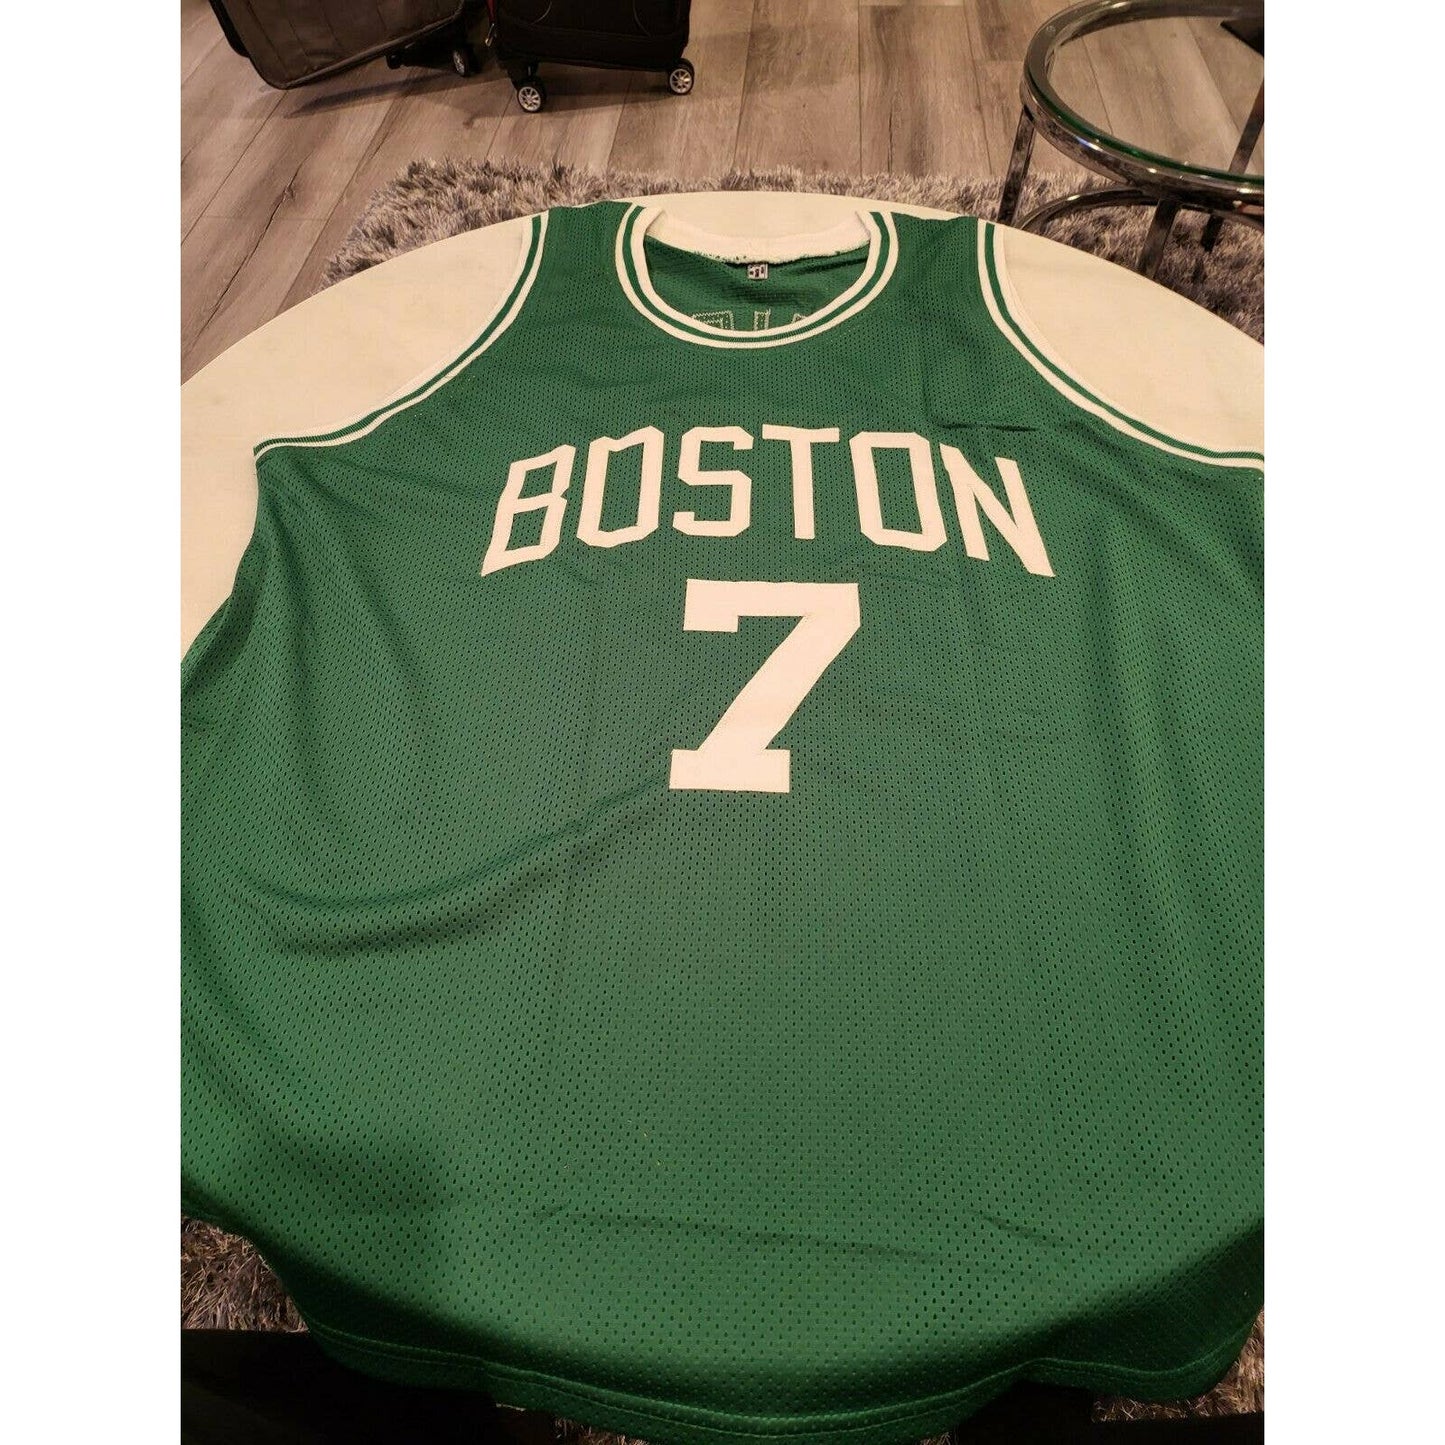 Nate Archibald Autographed/Signed Jersey JSA COA Boston Celtics Tiny Nate - TreasuresEvolved